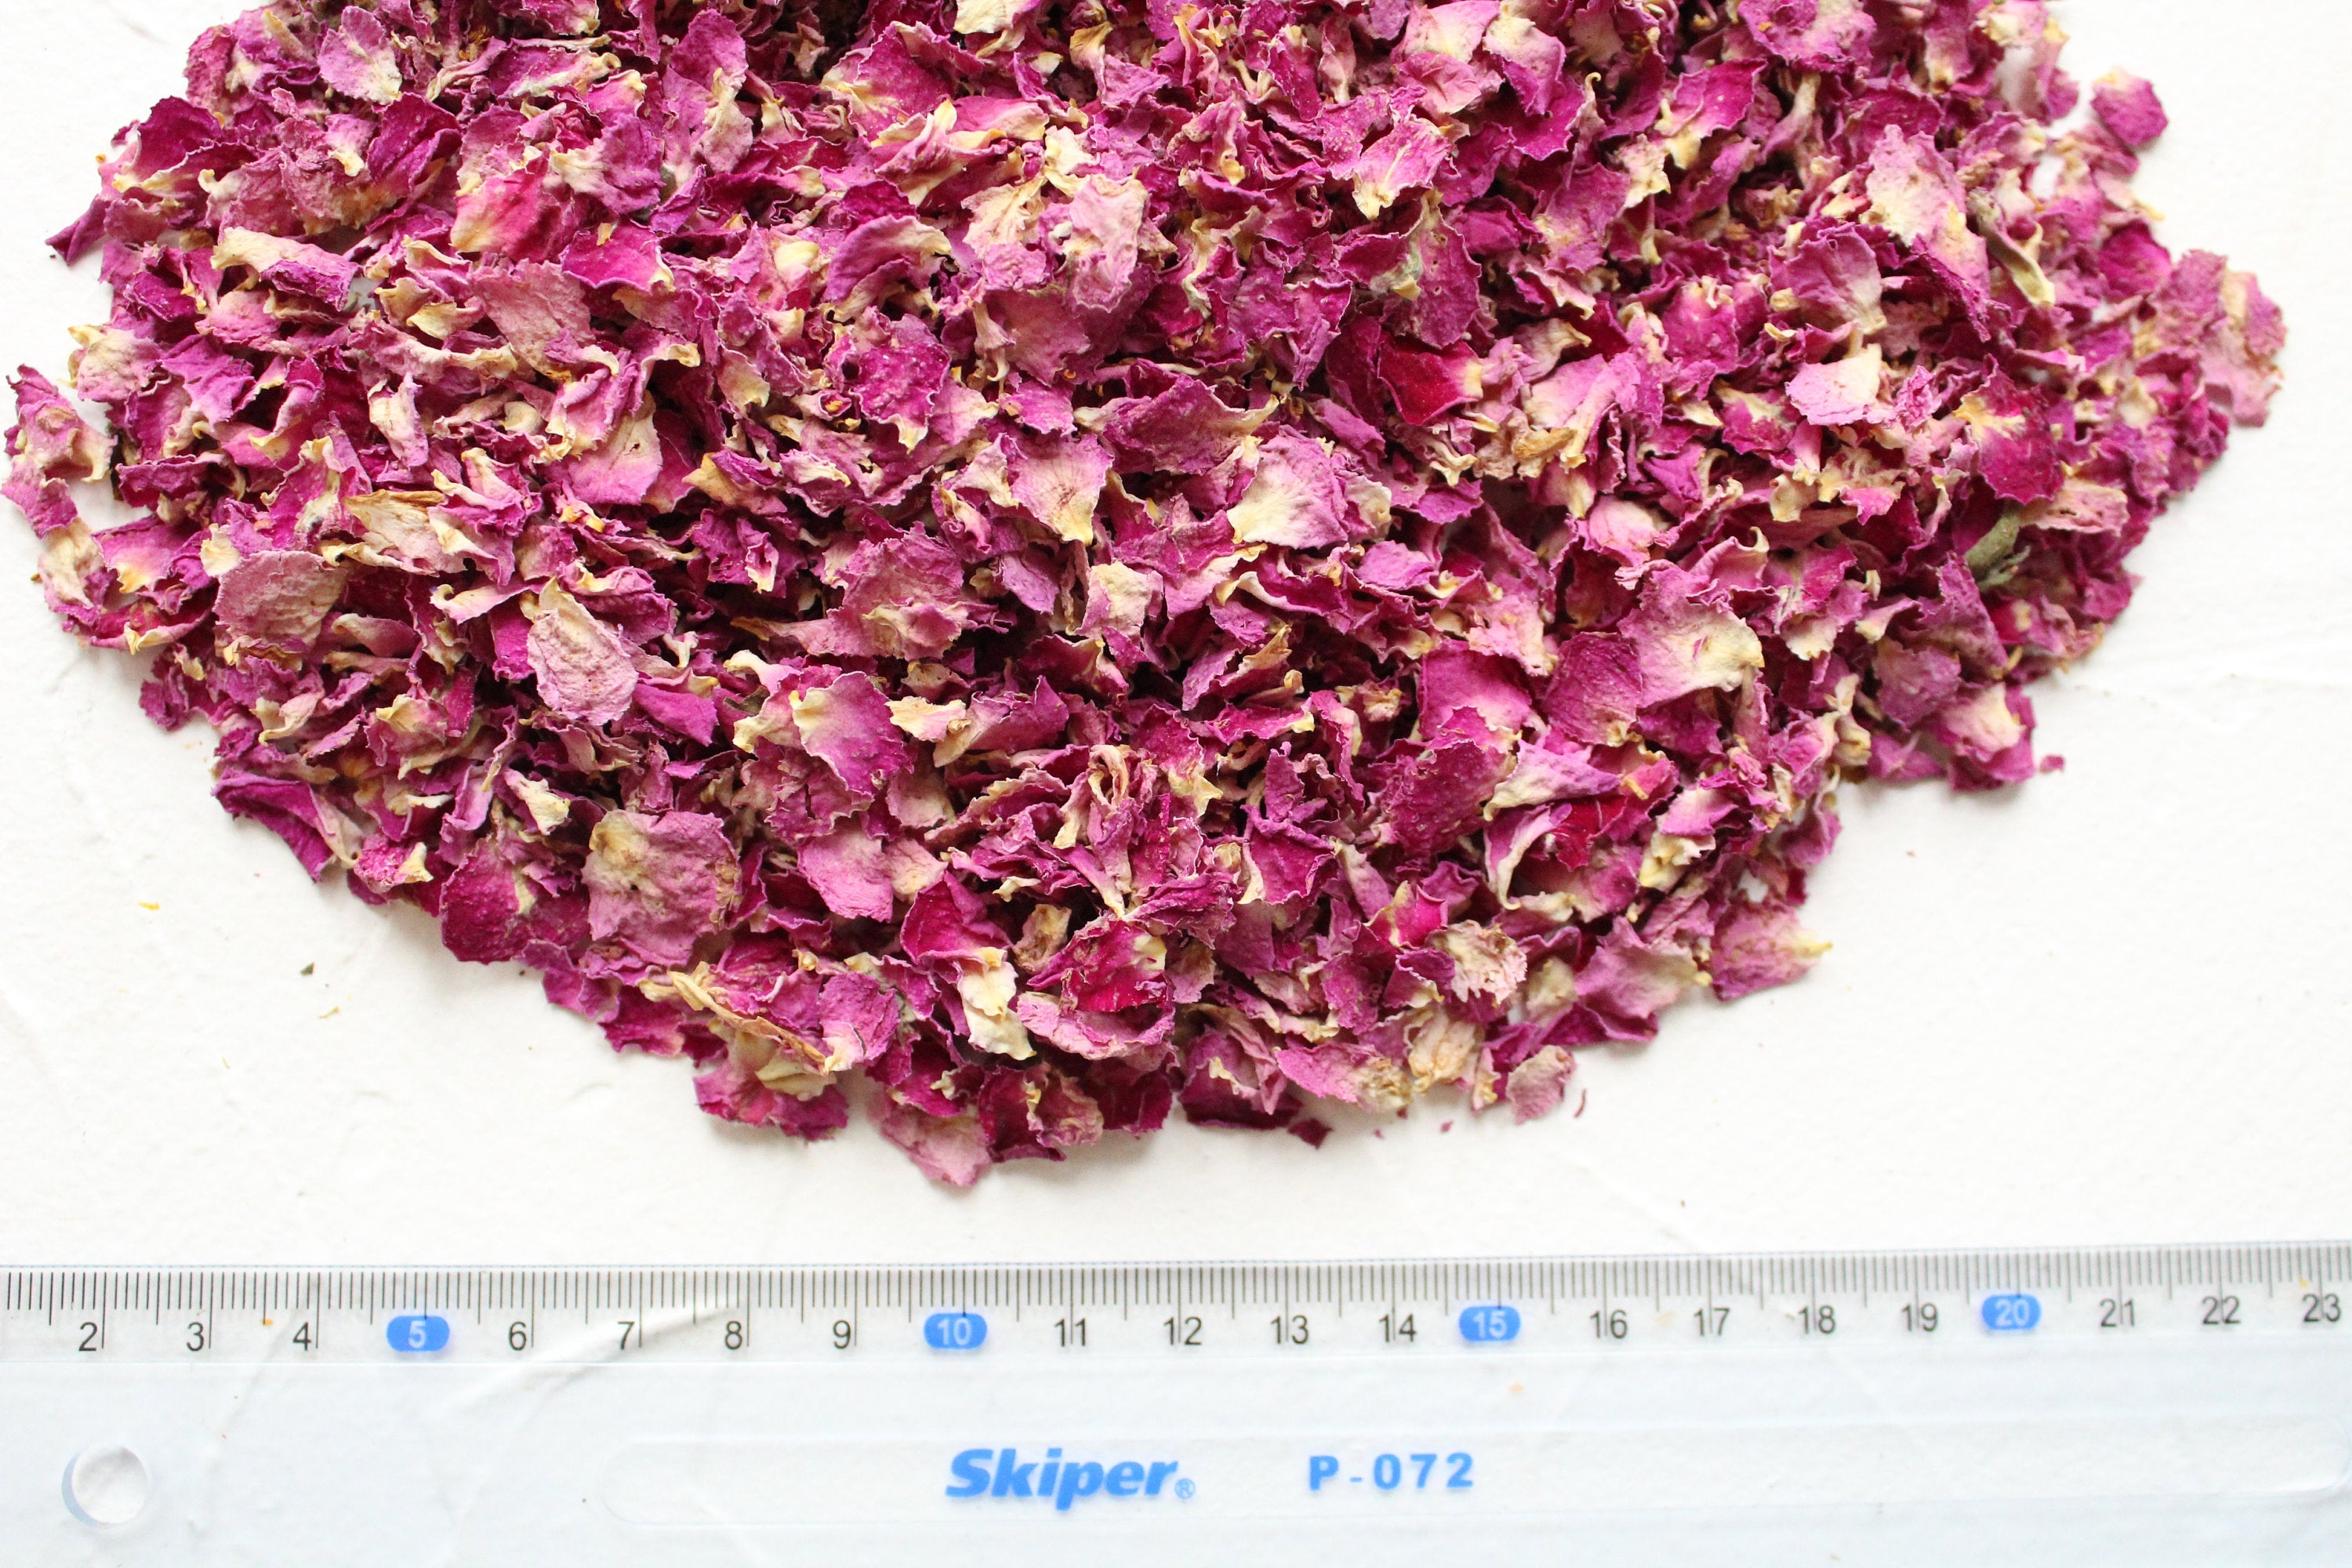 Pink rose petals, High Quality, Natural, Organic, Biodegraddable